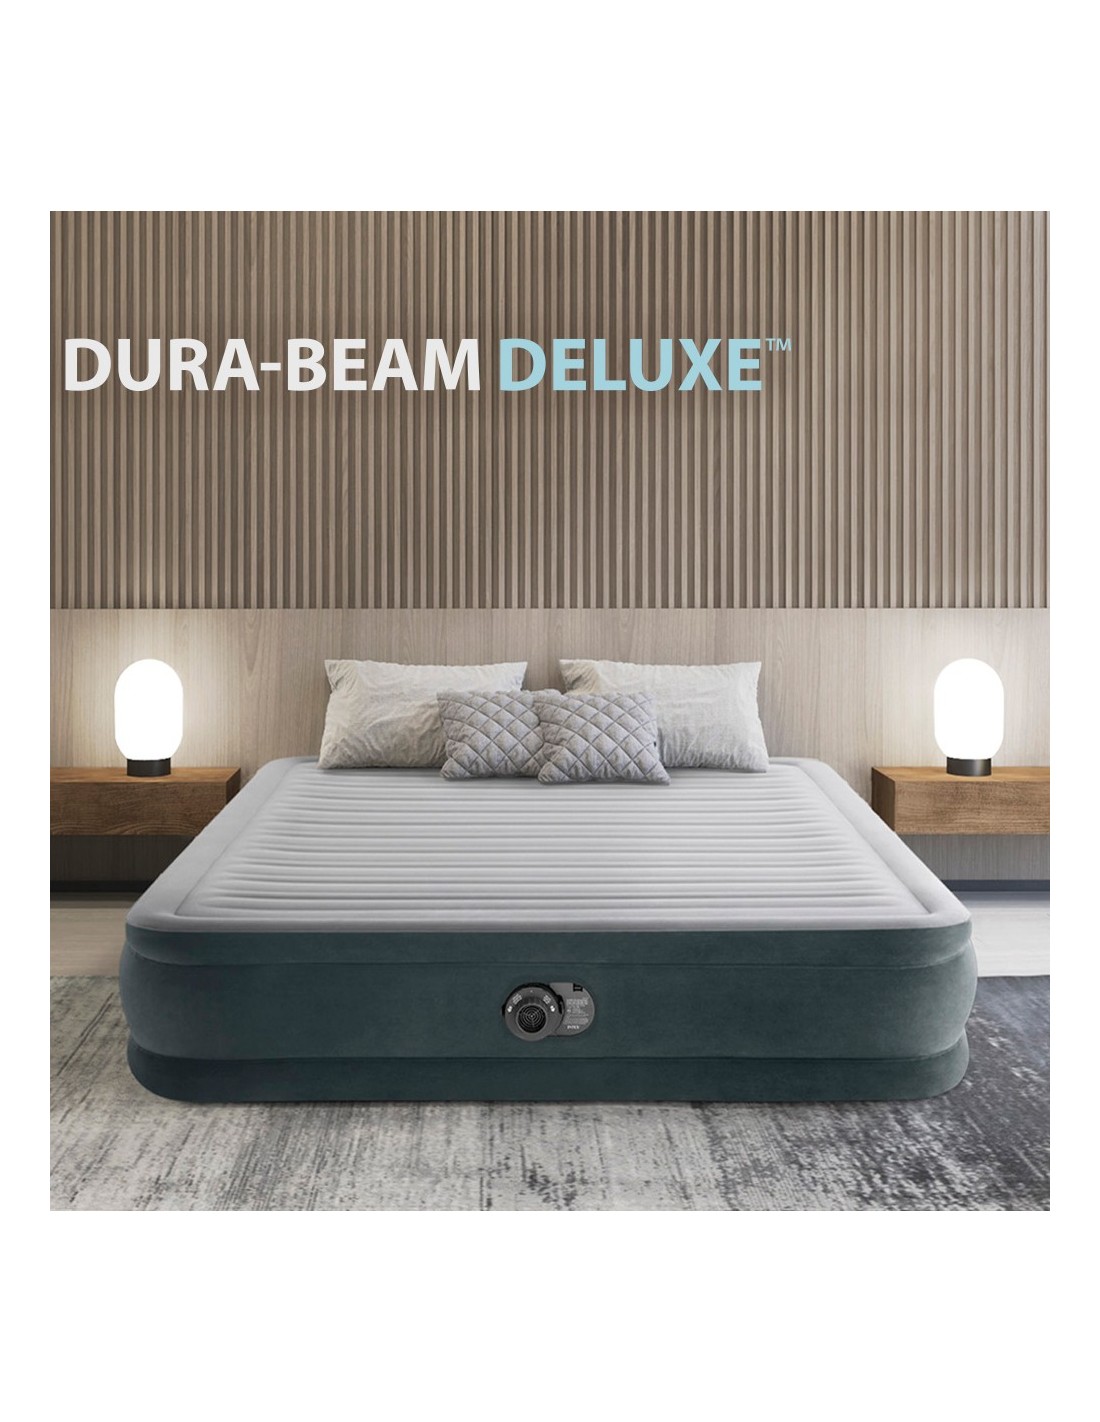 Colchón hinchable INTEX Dura-Beam Deluxe Comfort-Plush 152x203x56